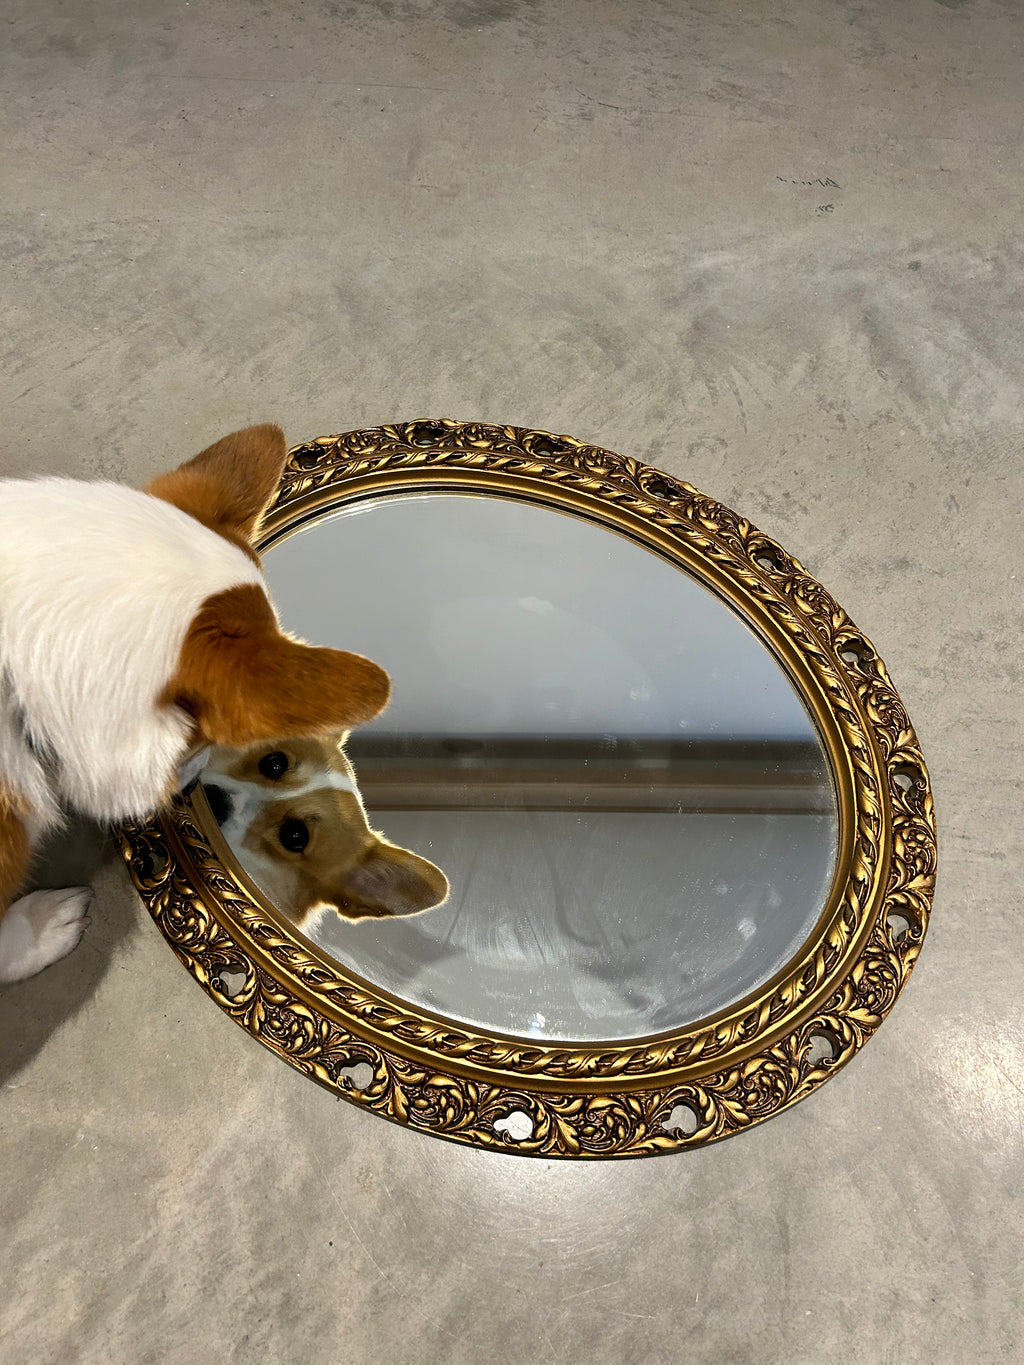 Antique ornate golden oval mirror